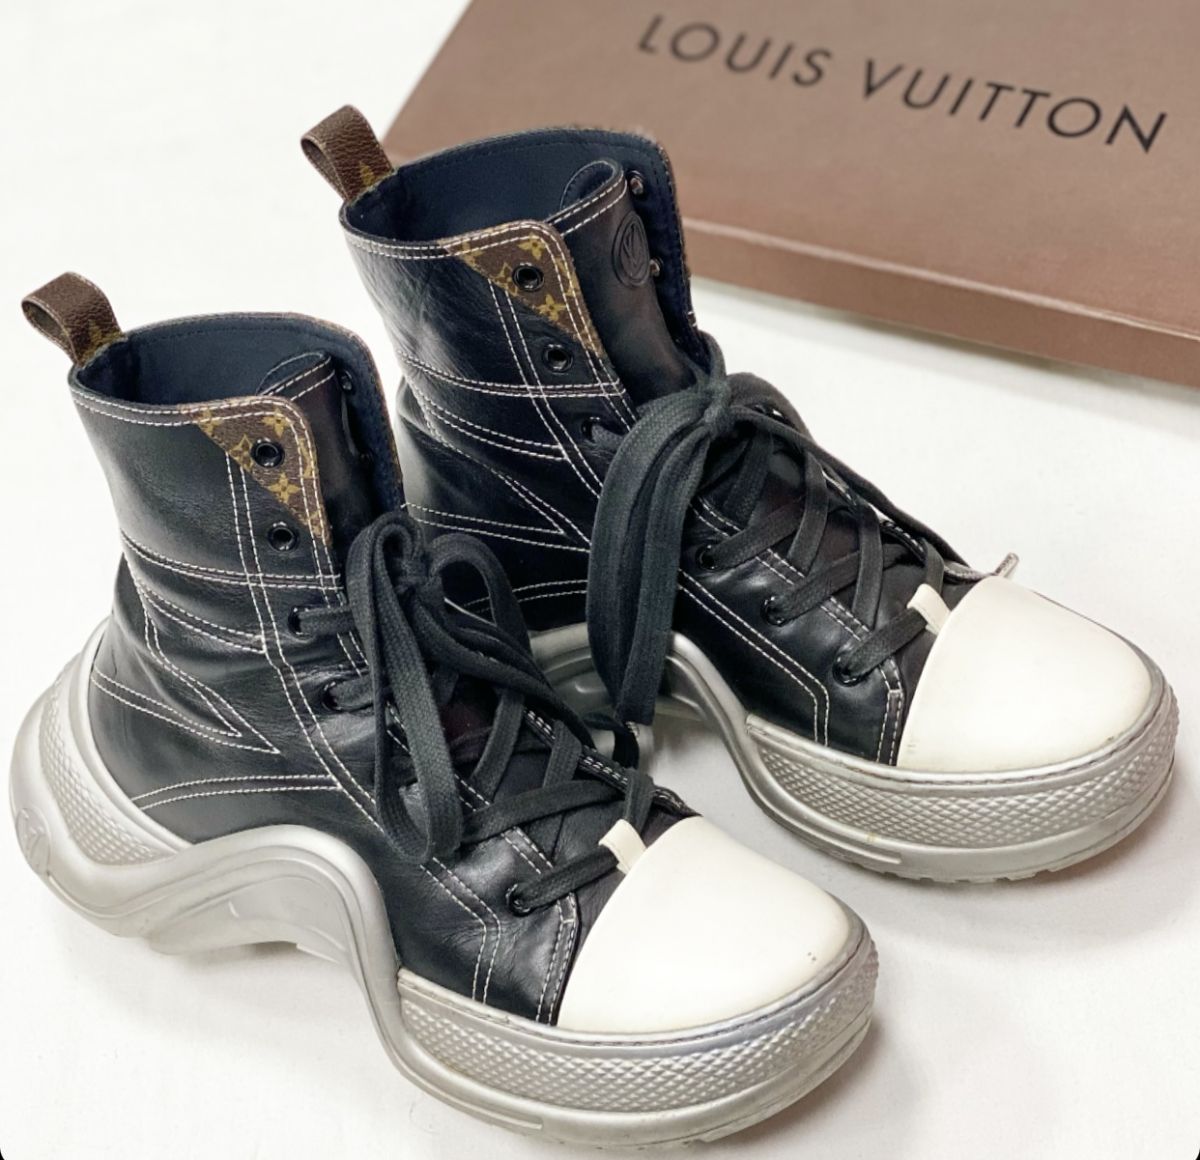 Ботинки Louis Vuitton размер 38.5 цена 30 770 руб 